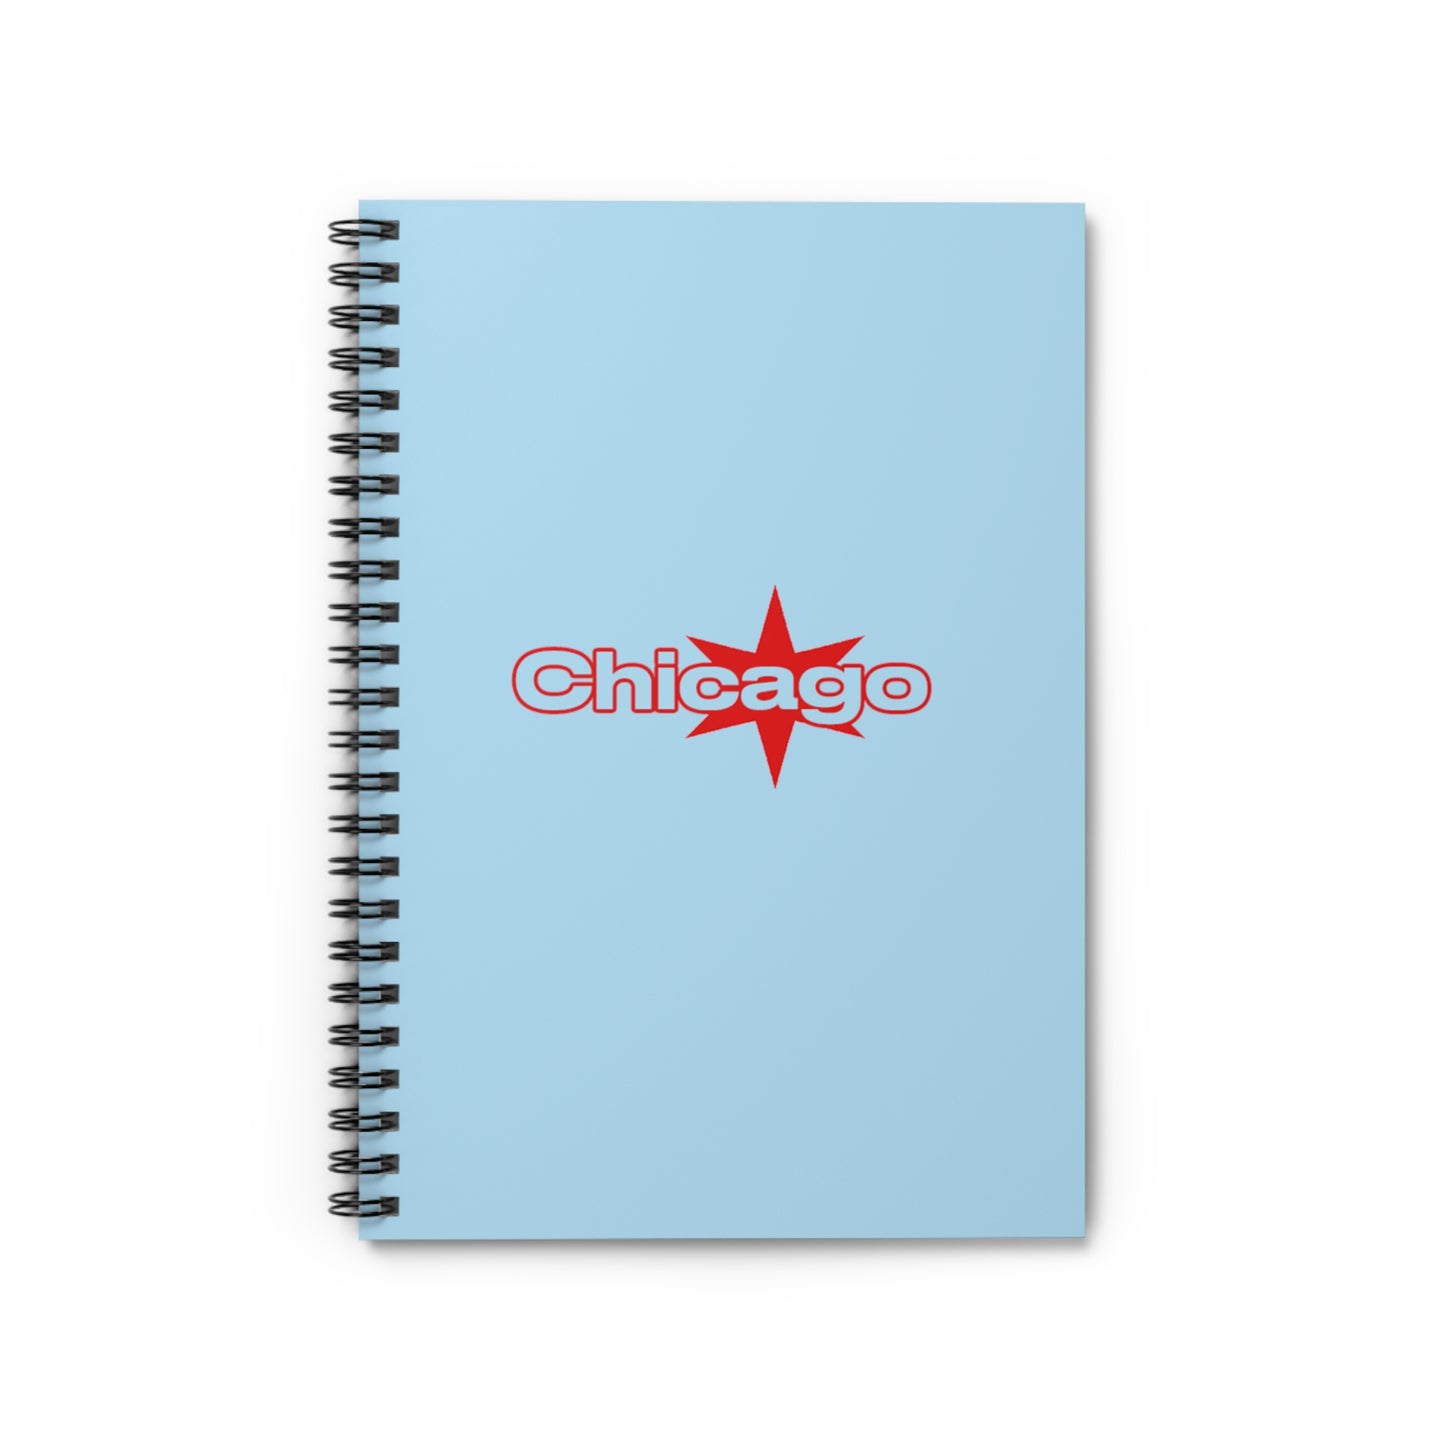 Chicago Spiral Notebook (Ruled Line)